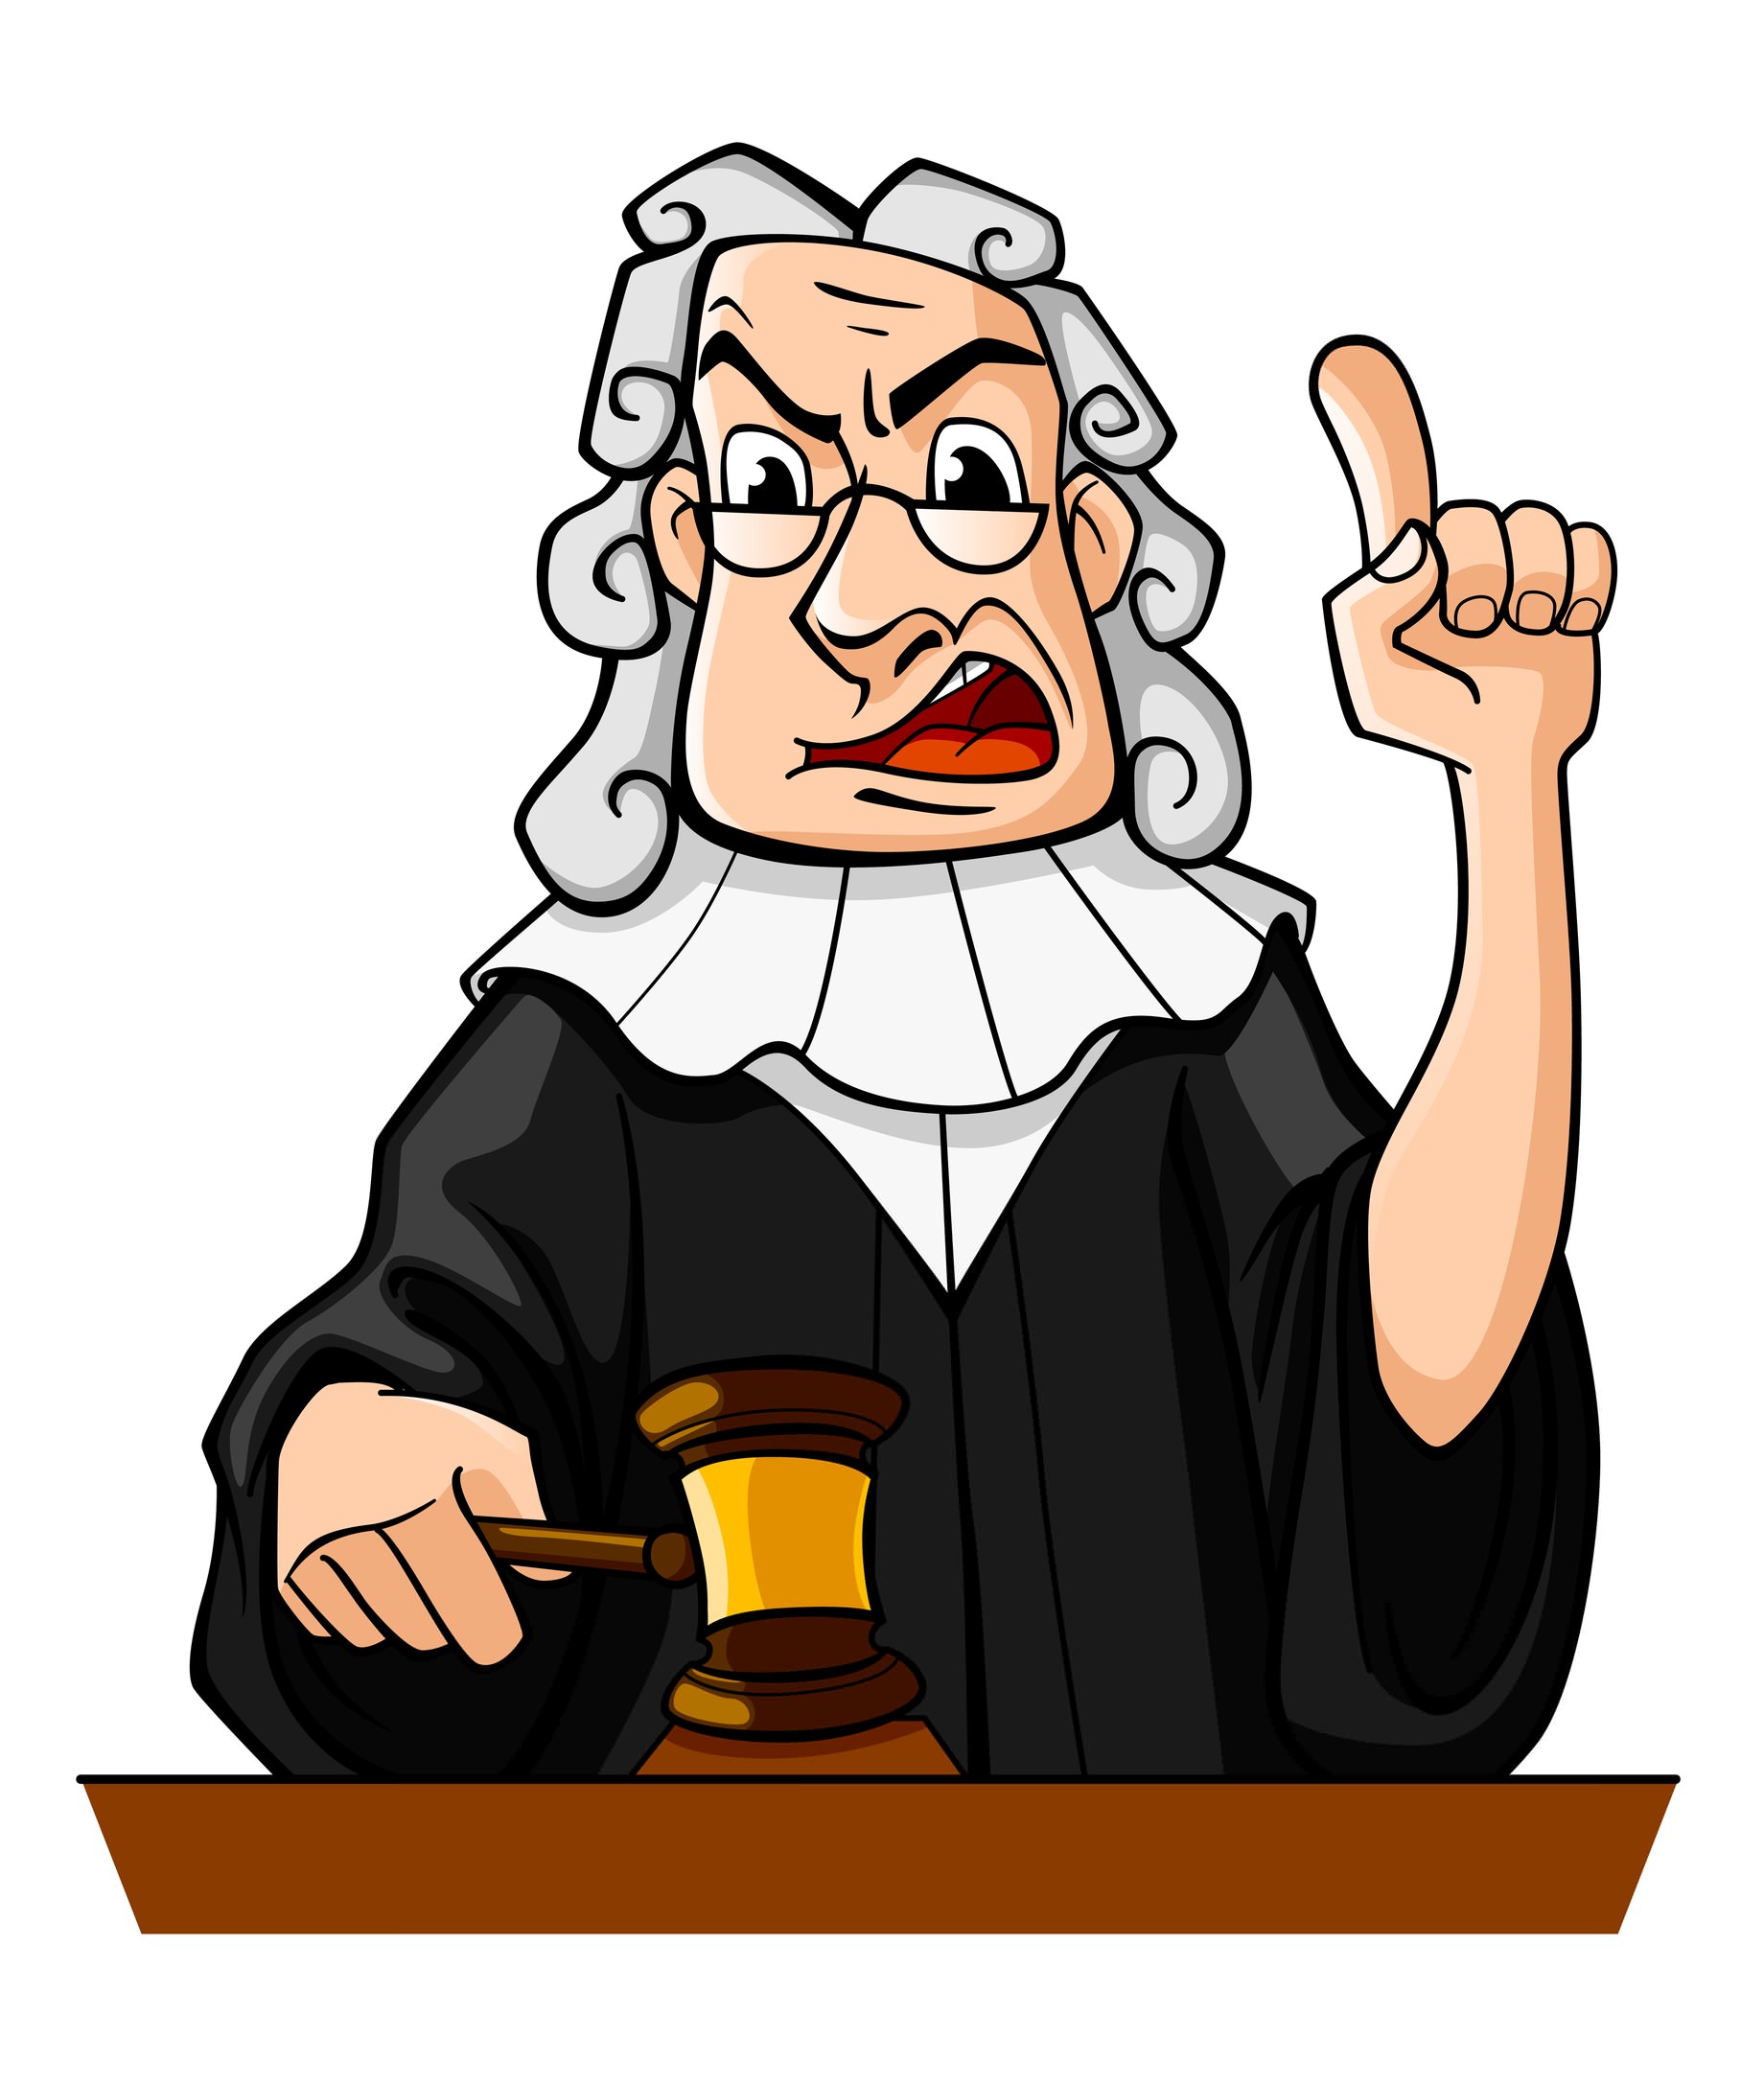 Jury clipart preliminary hearing. Free cartoon judge download